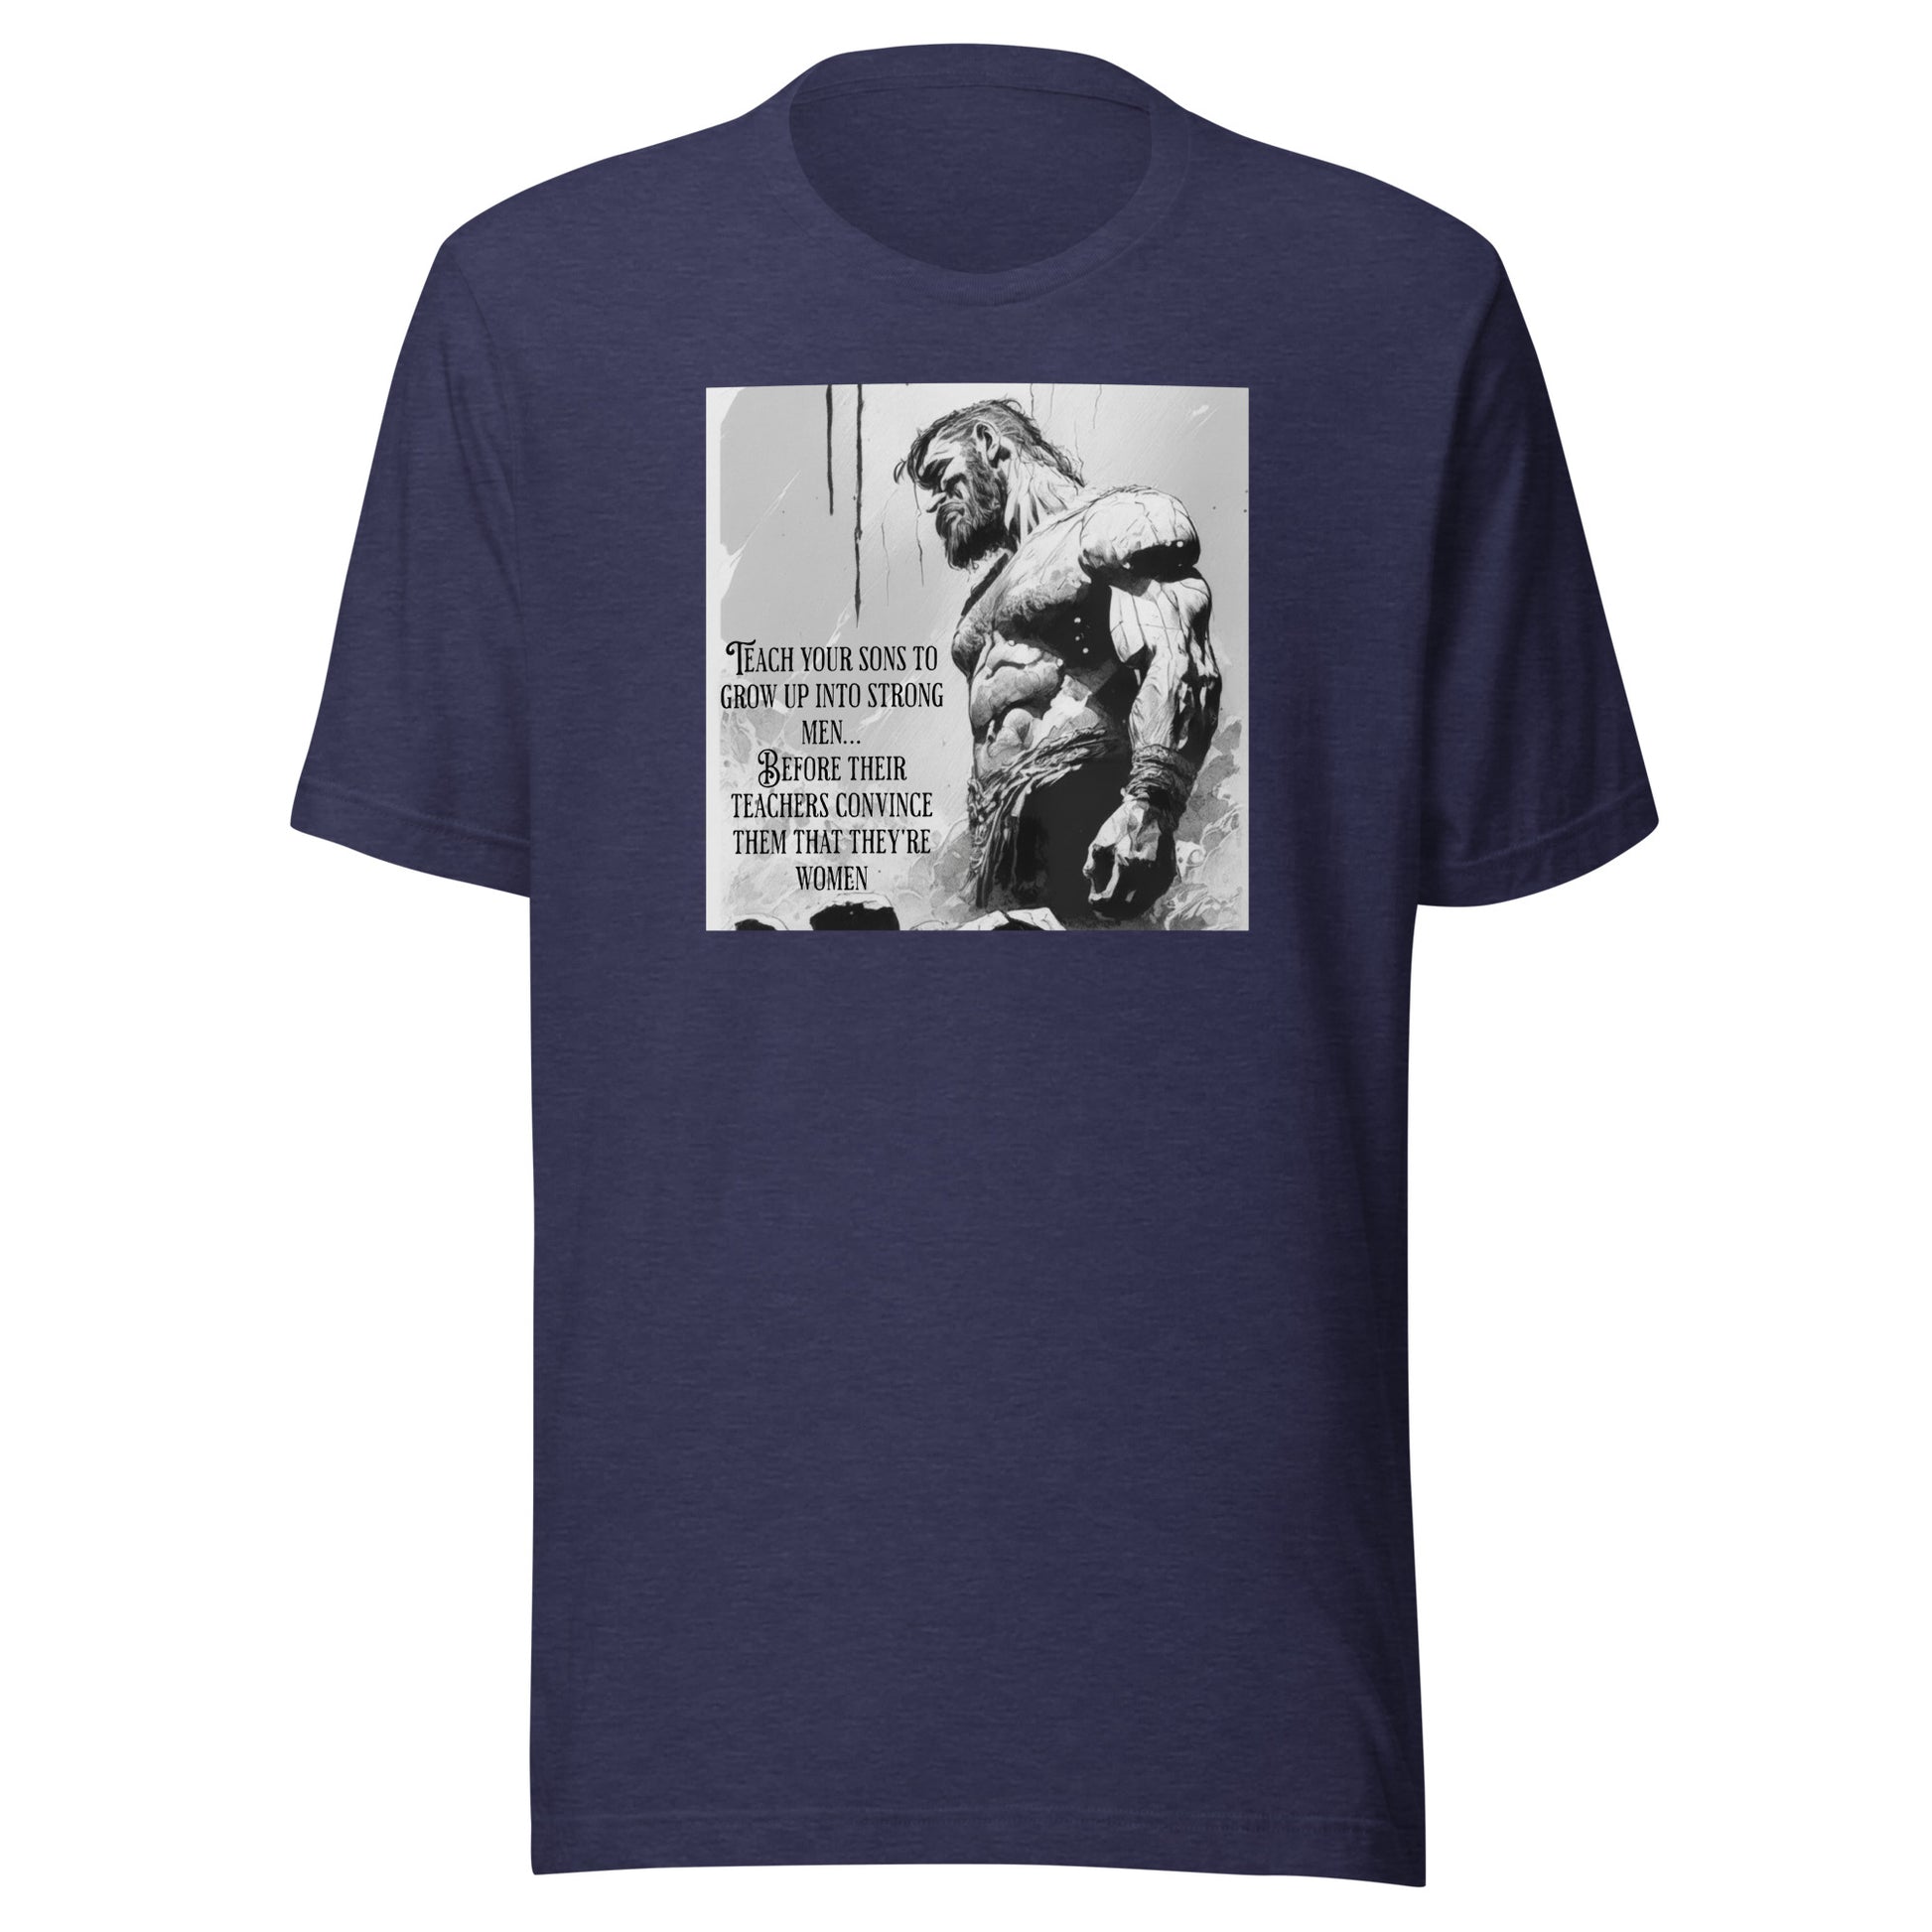 Raise Strong Men Graphic Men's T-Shirt Heather Midnight Navy